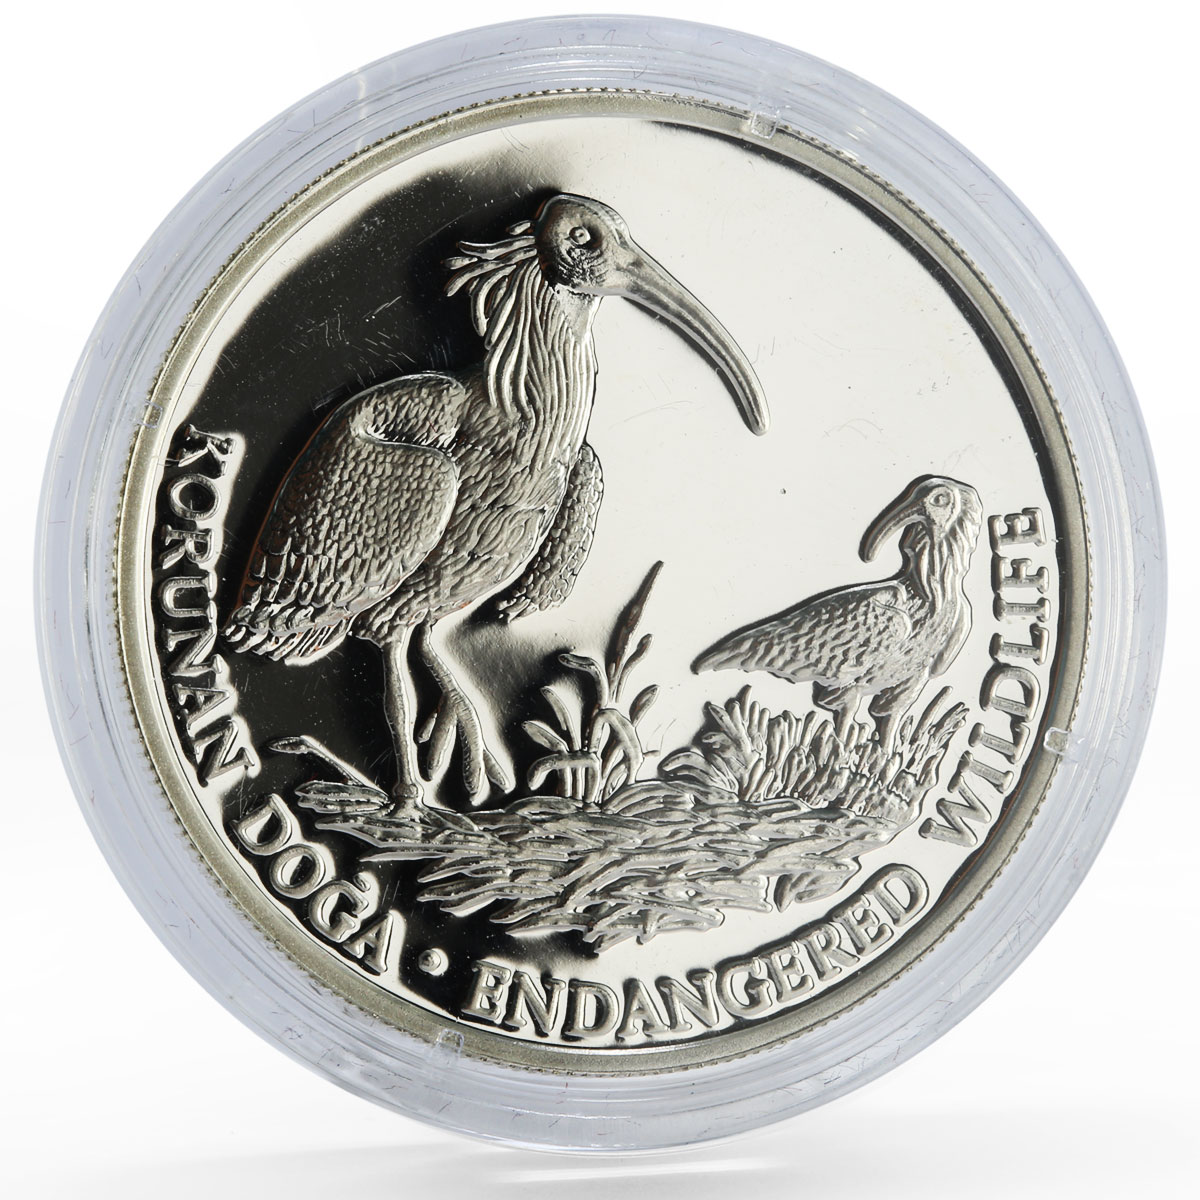 Turkey 50000 lira Endangered Widlife Fauna Bald Ibis Bird silver coin 1995